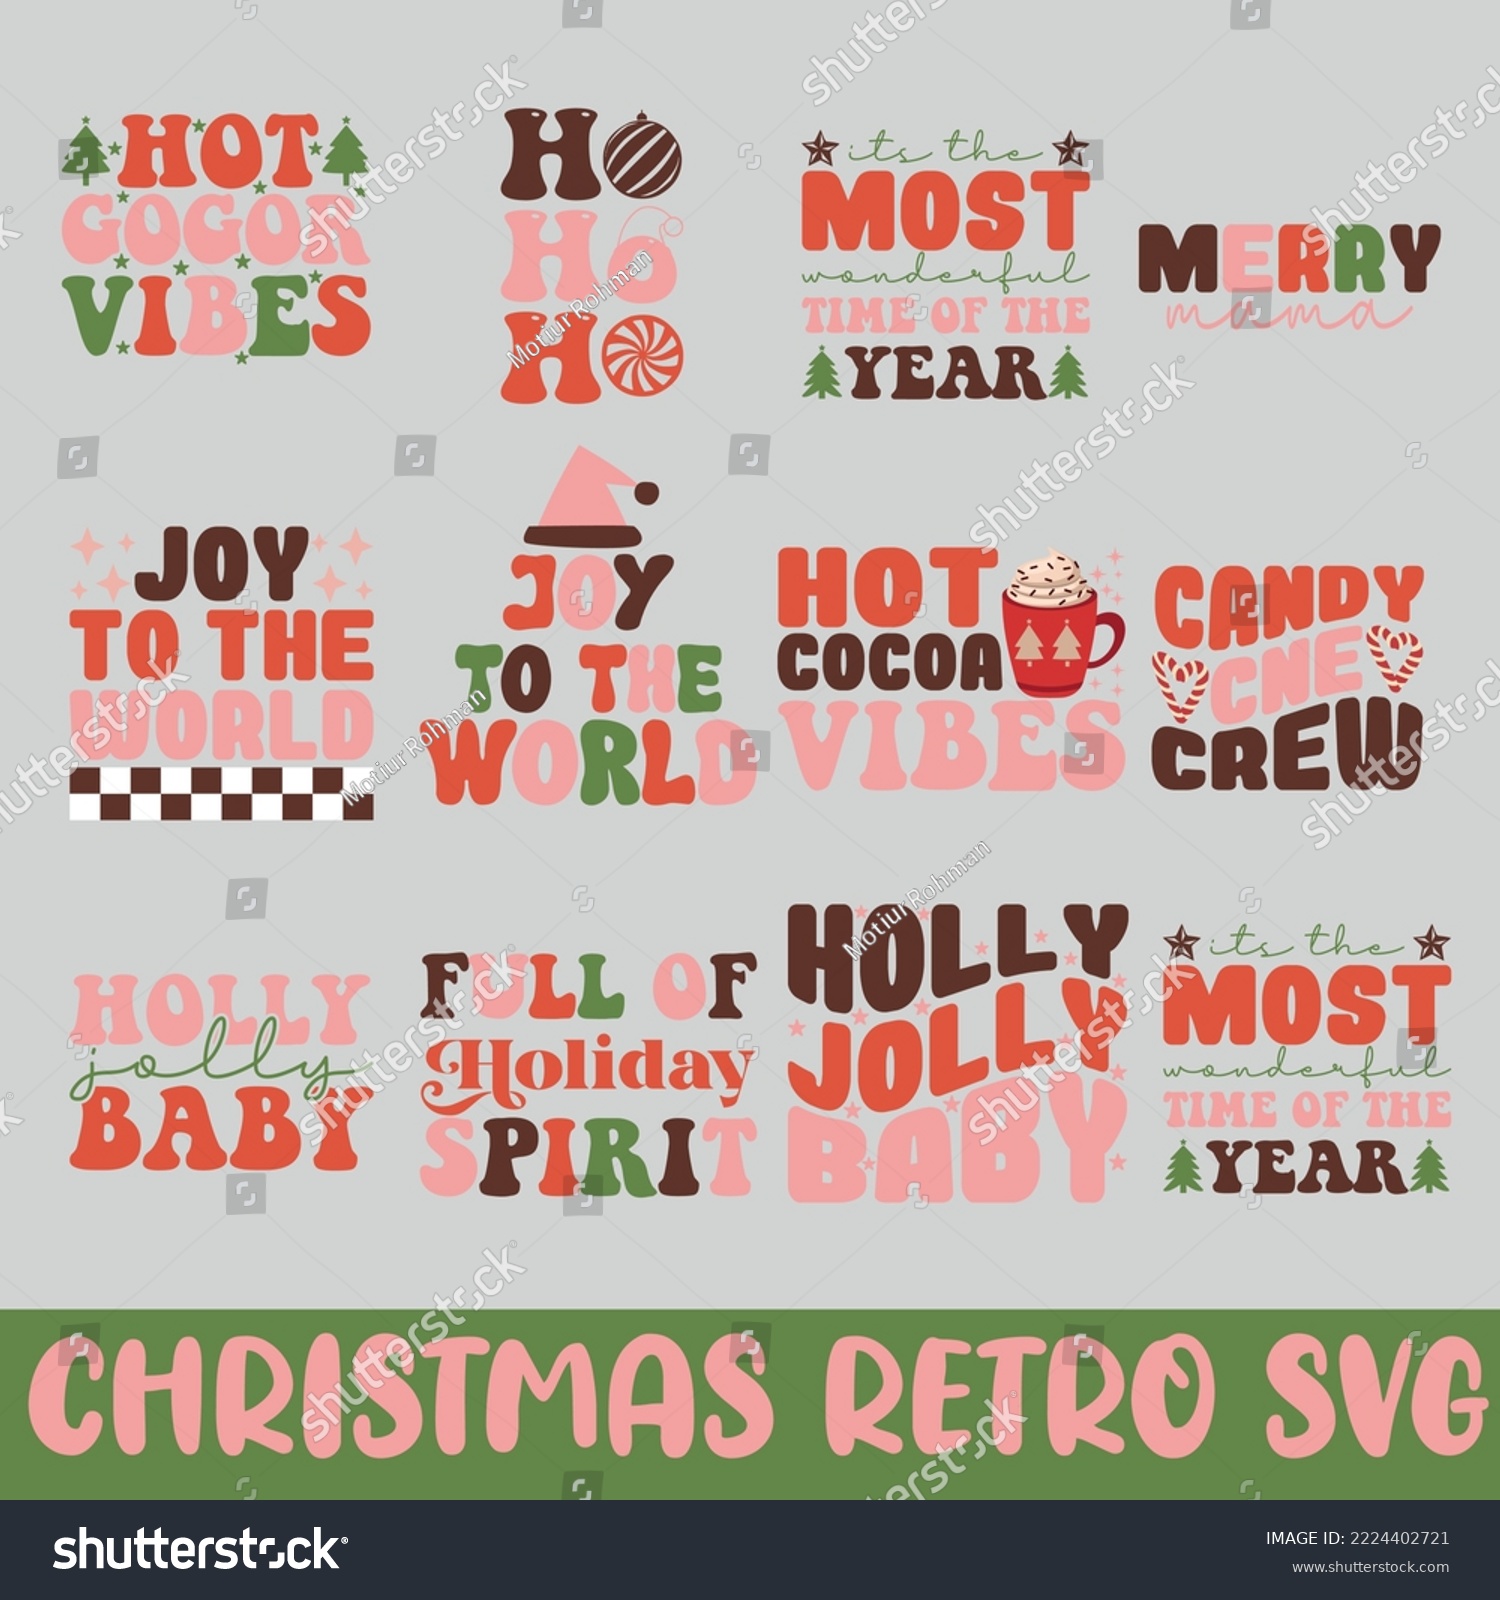 SVG of Retro Christmas SVG Bundle DESIGN svg